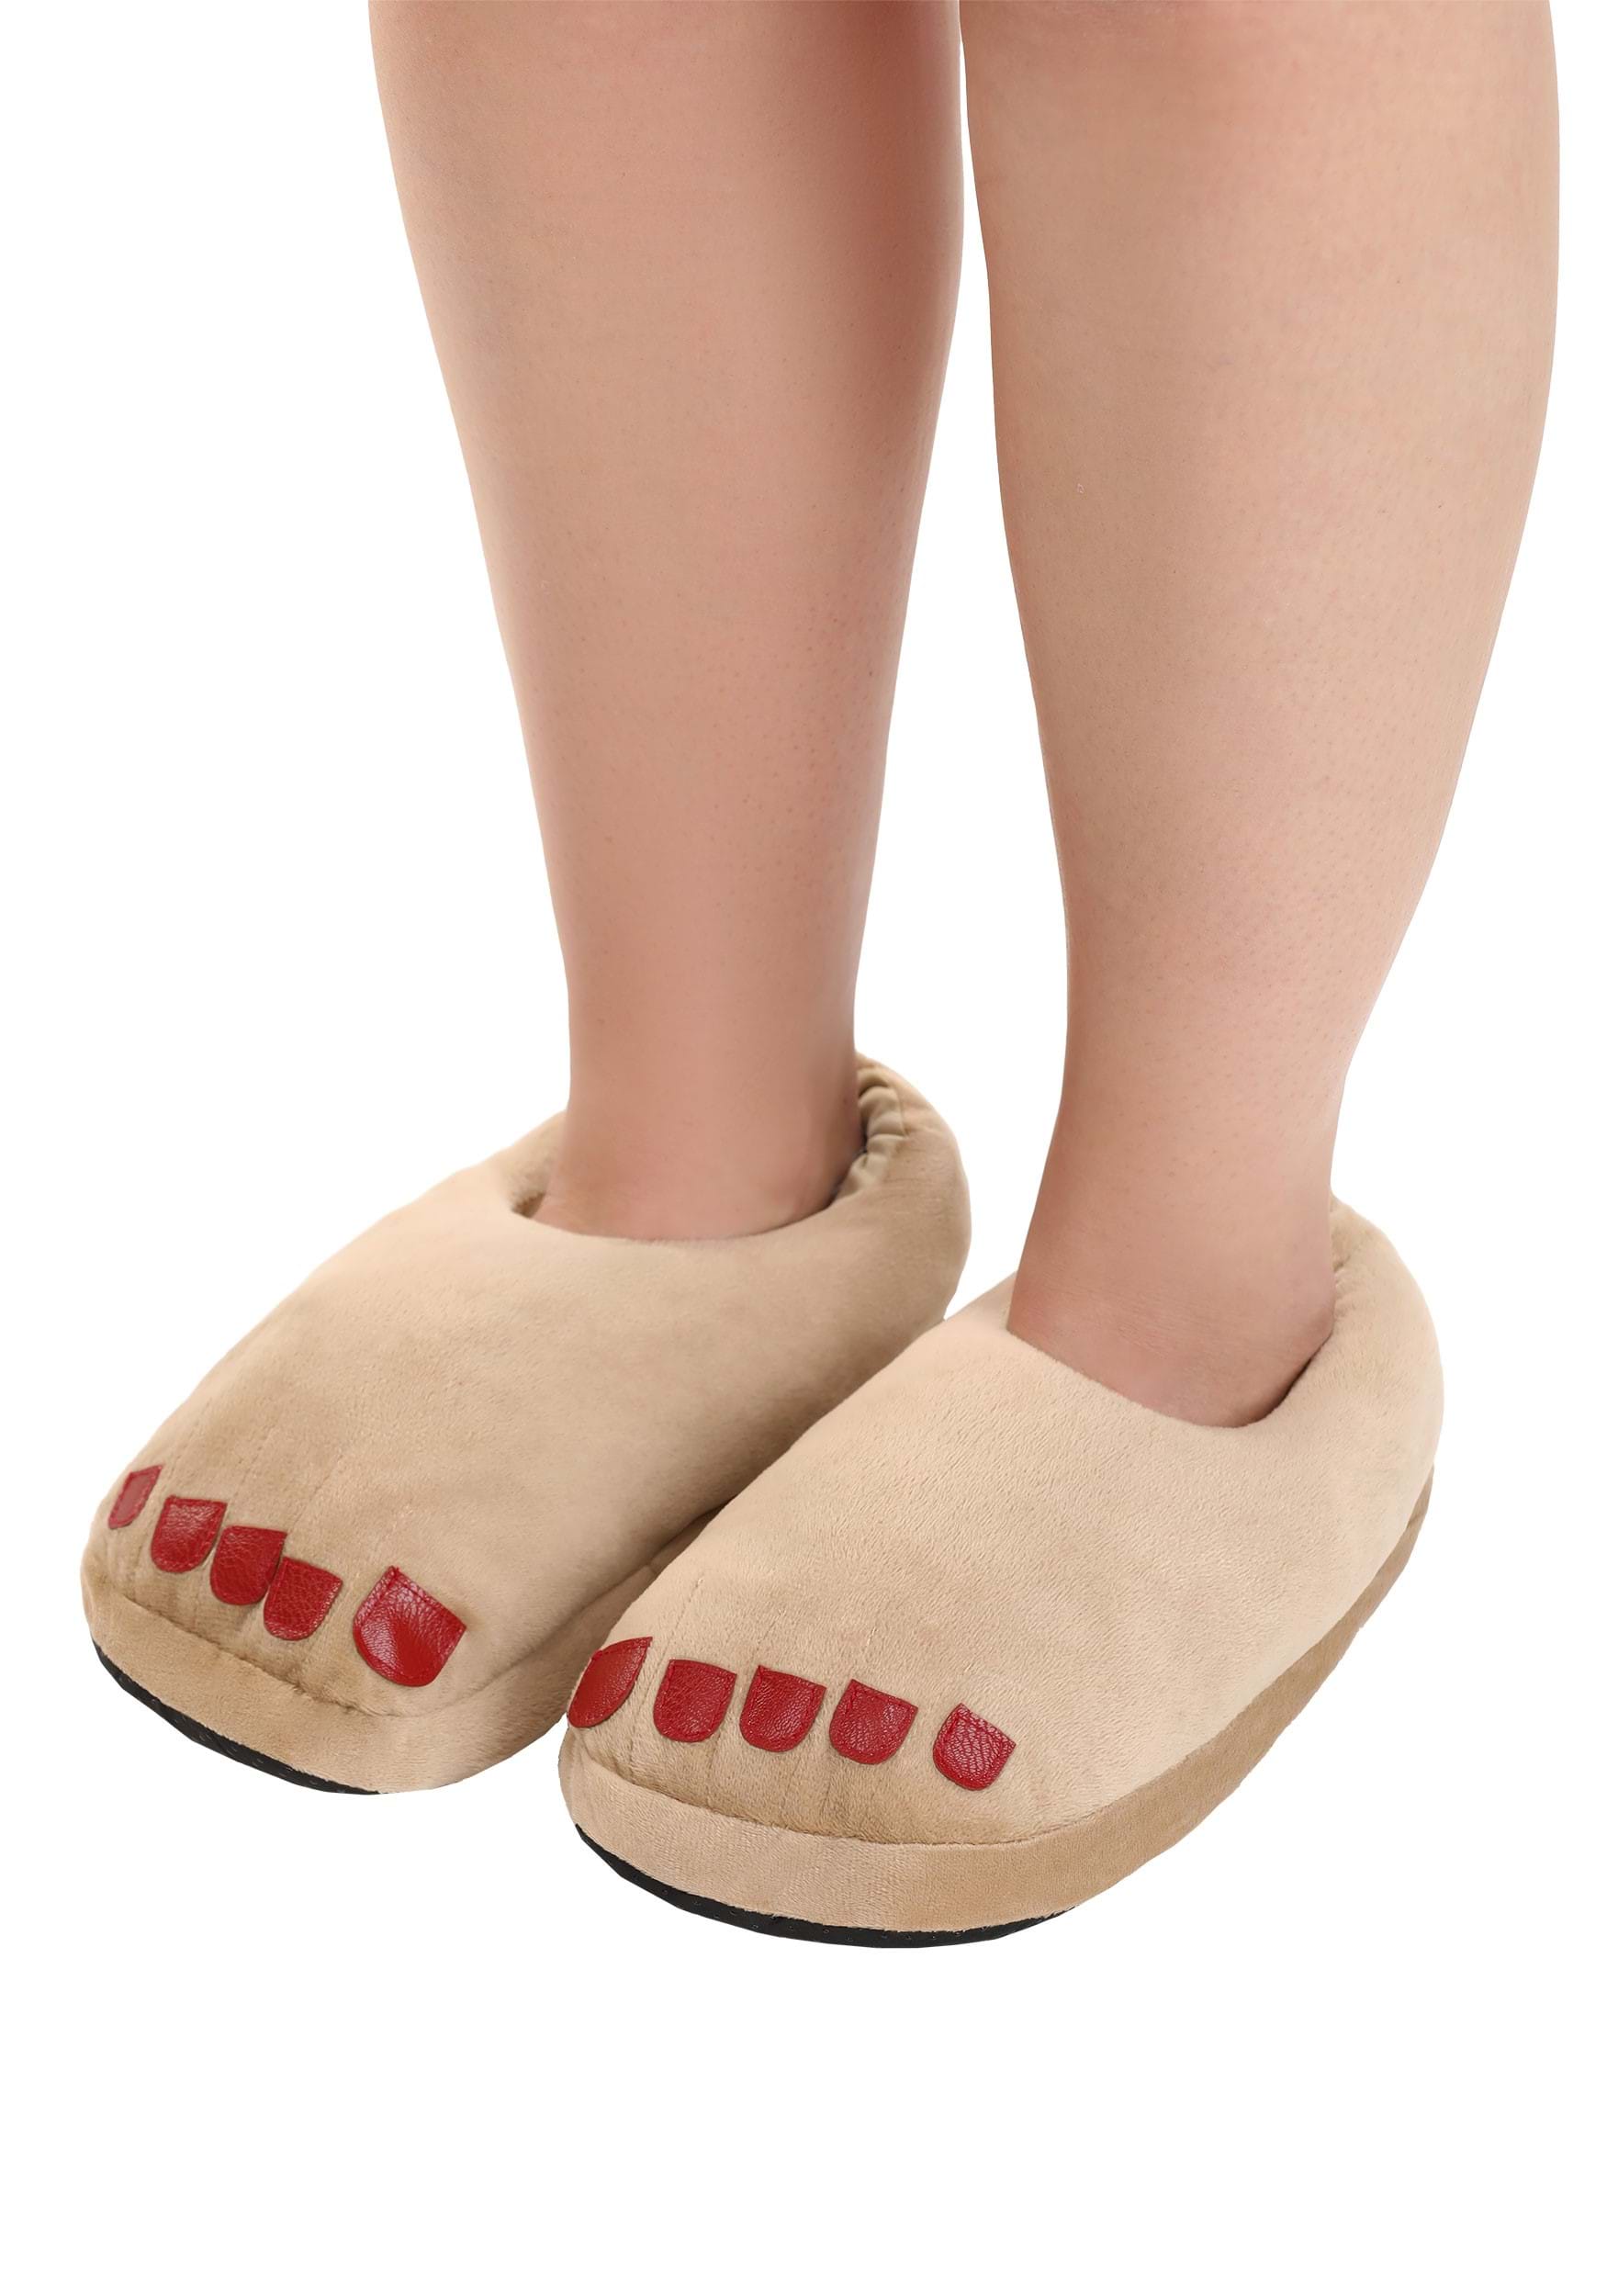 Caveman Women's Feet